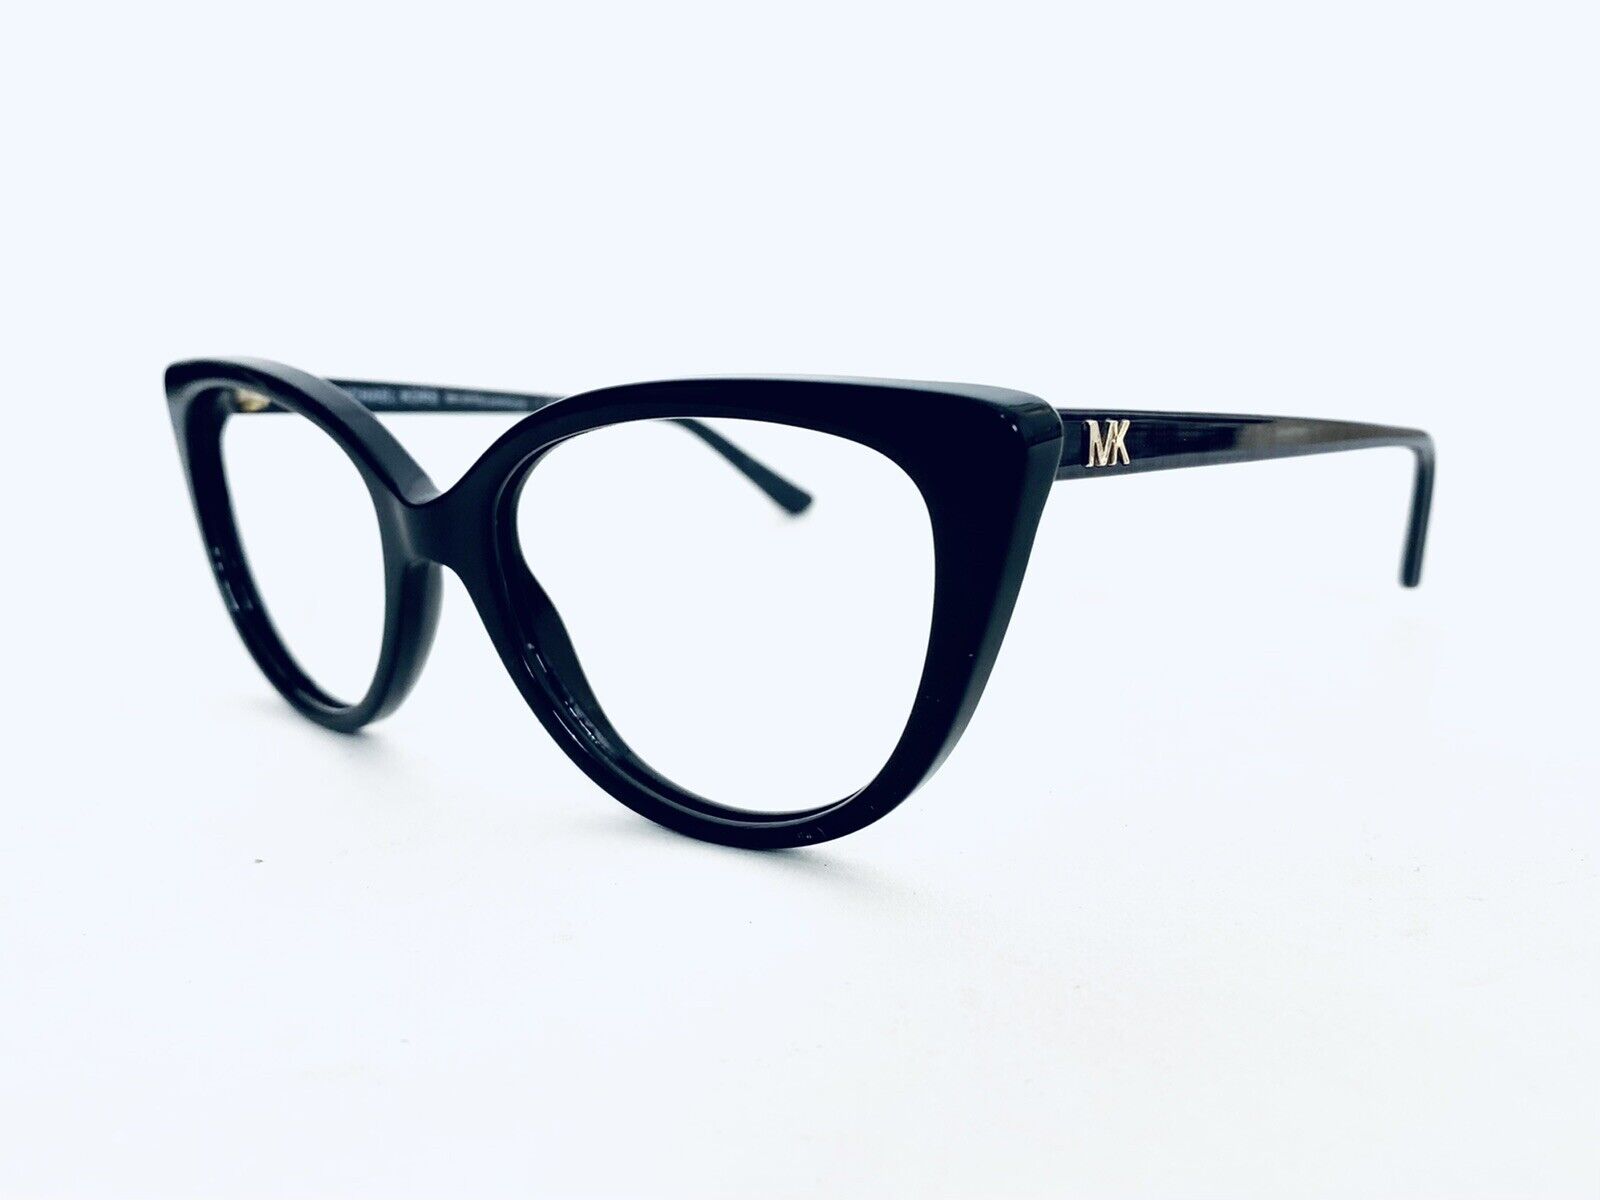 Michael Kors Black Cats Eye Glasses w Gold Accent MK4070 3005 52 17 140 |  eBay